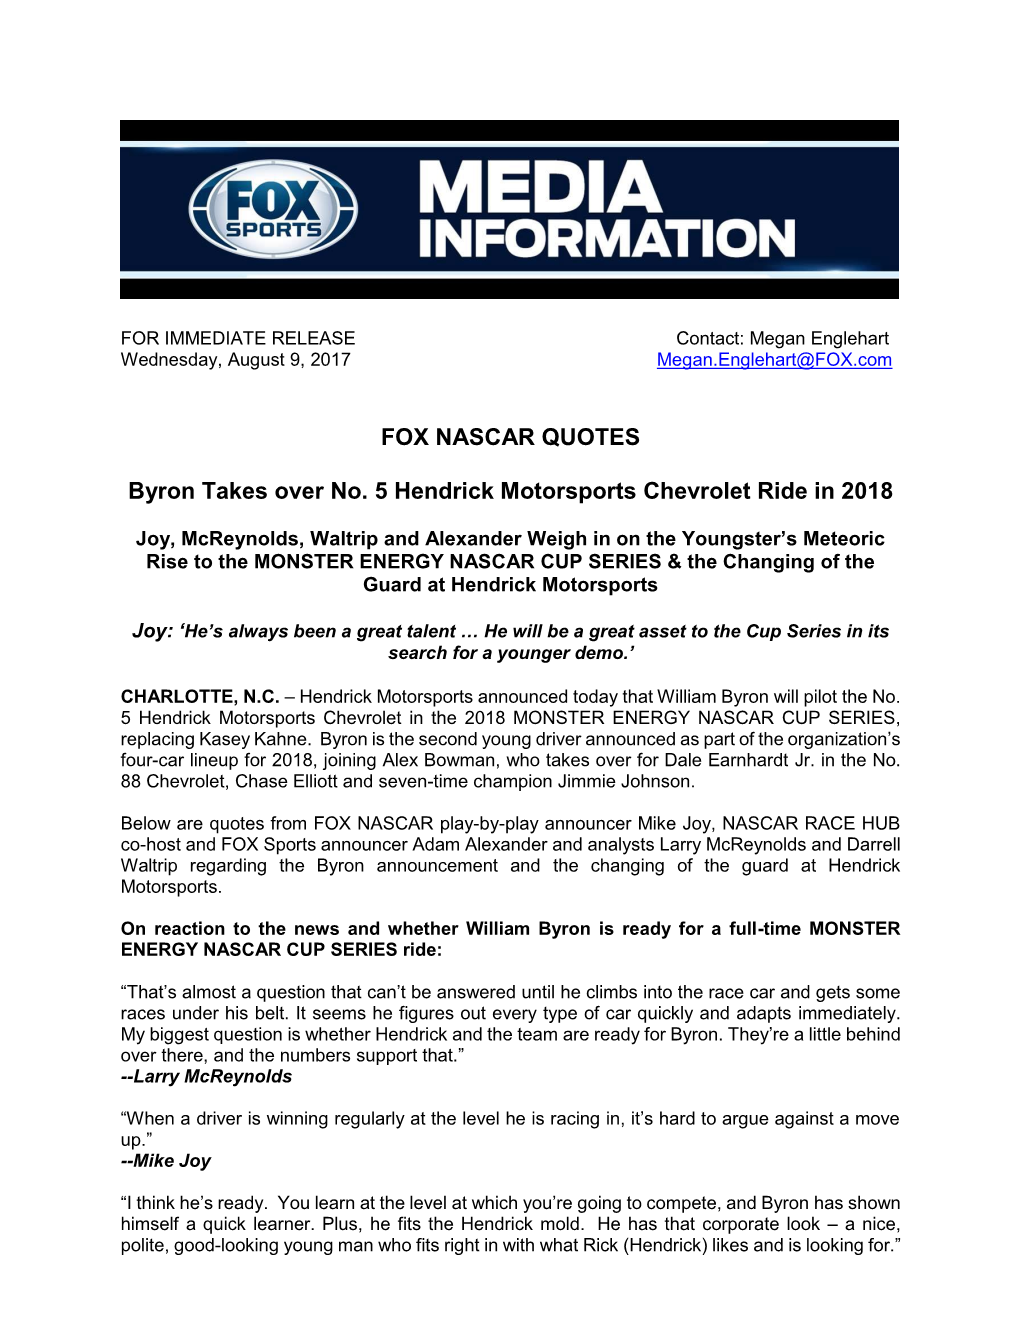 FOX NASCAR QUOTES Byron Takes Over No. 5 Hendrick Motorsports